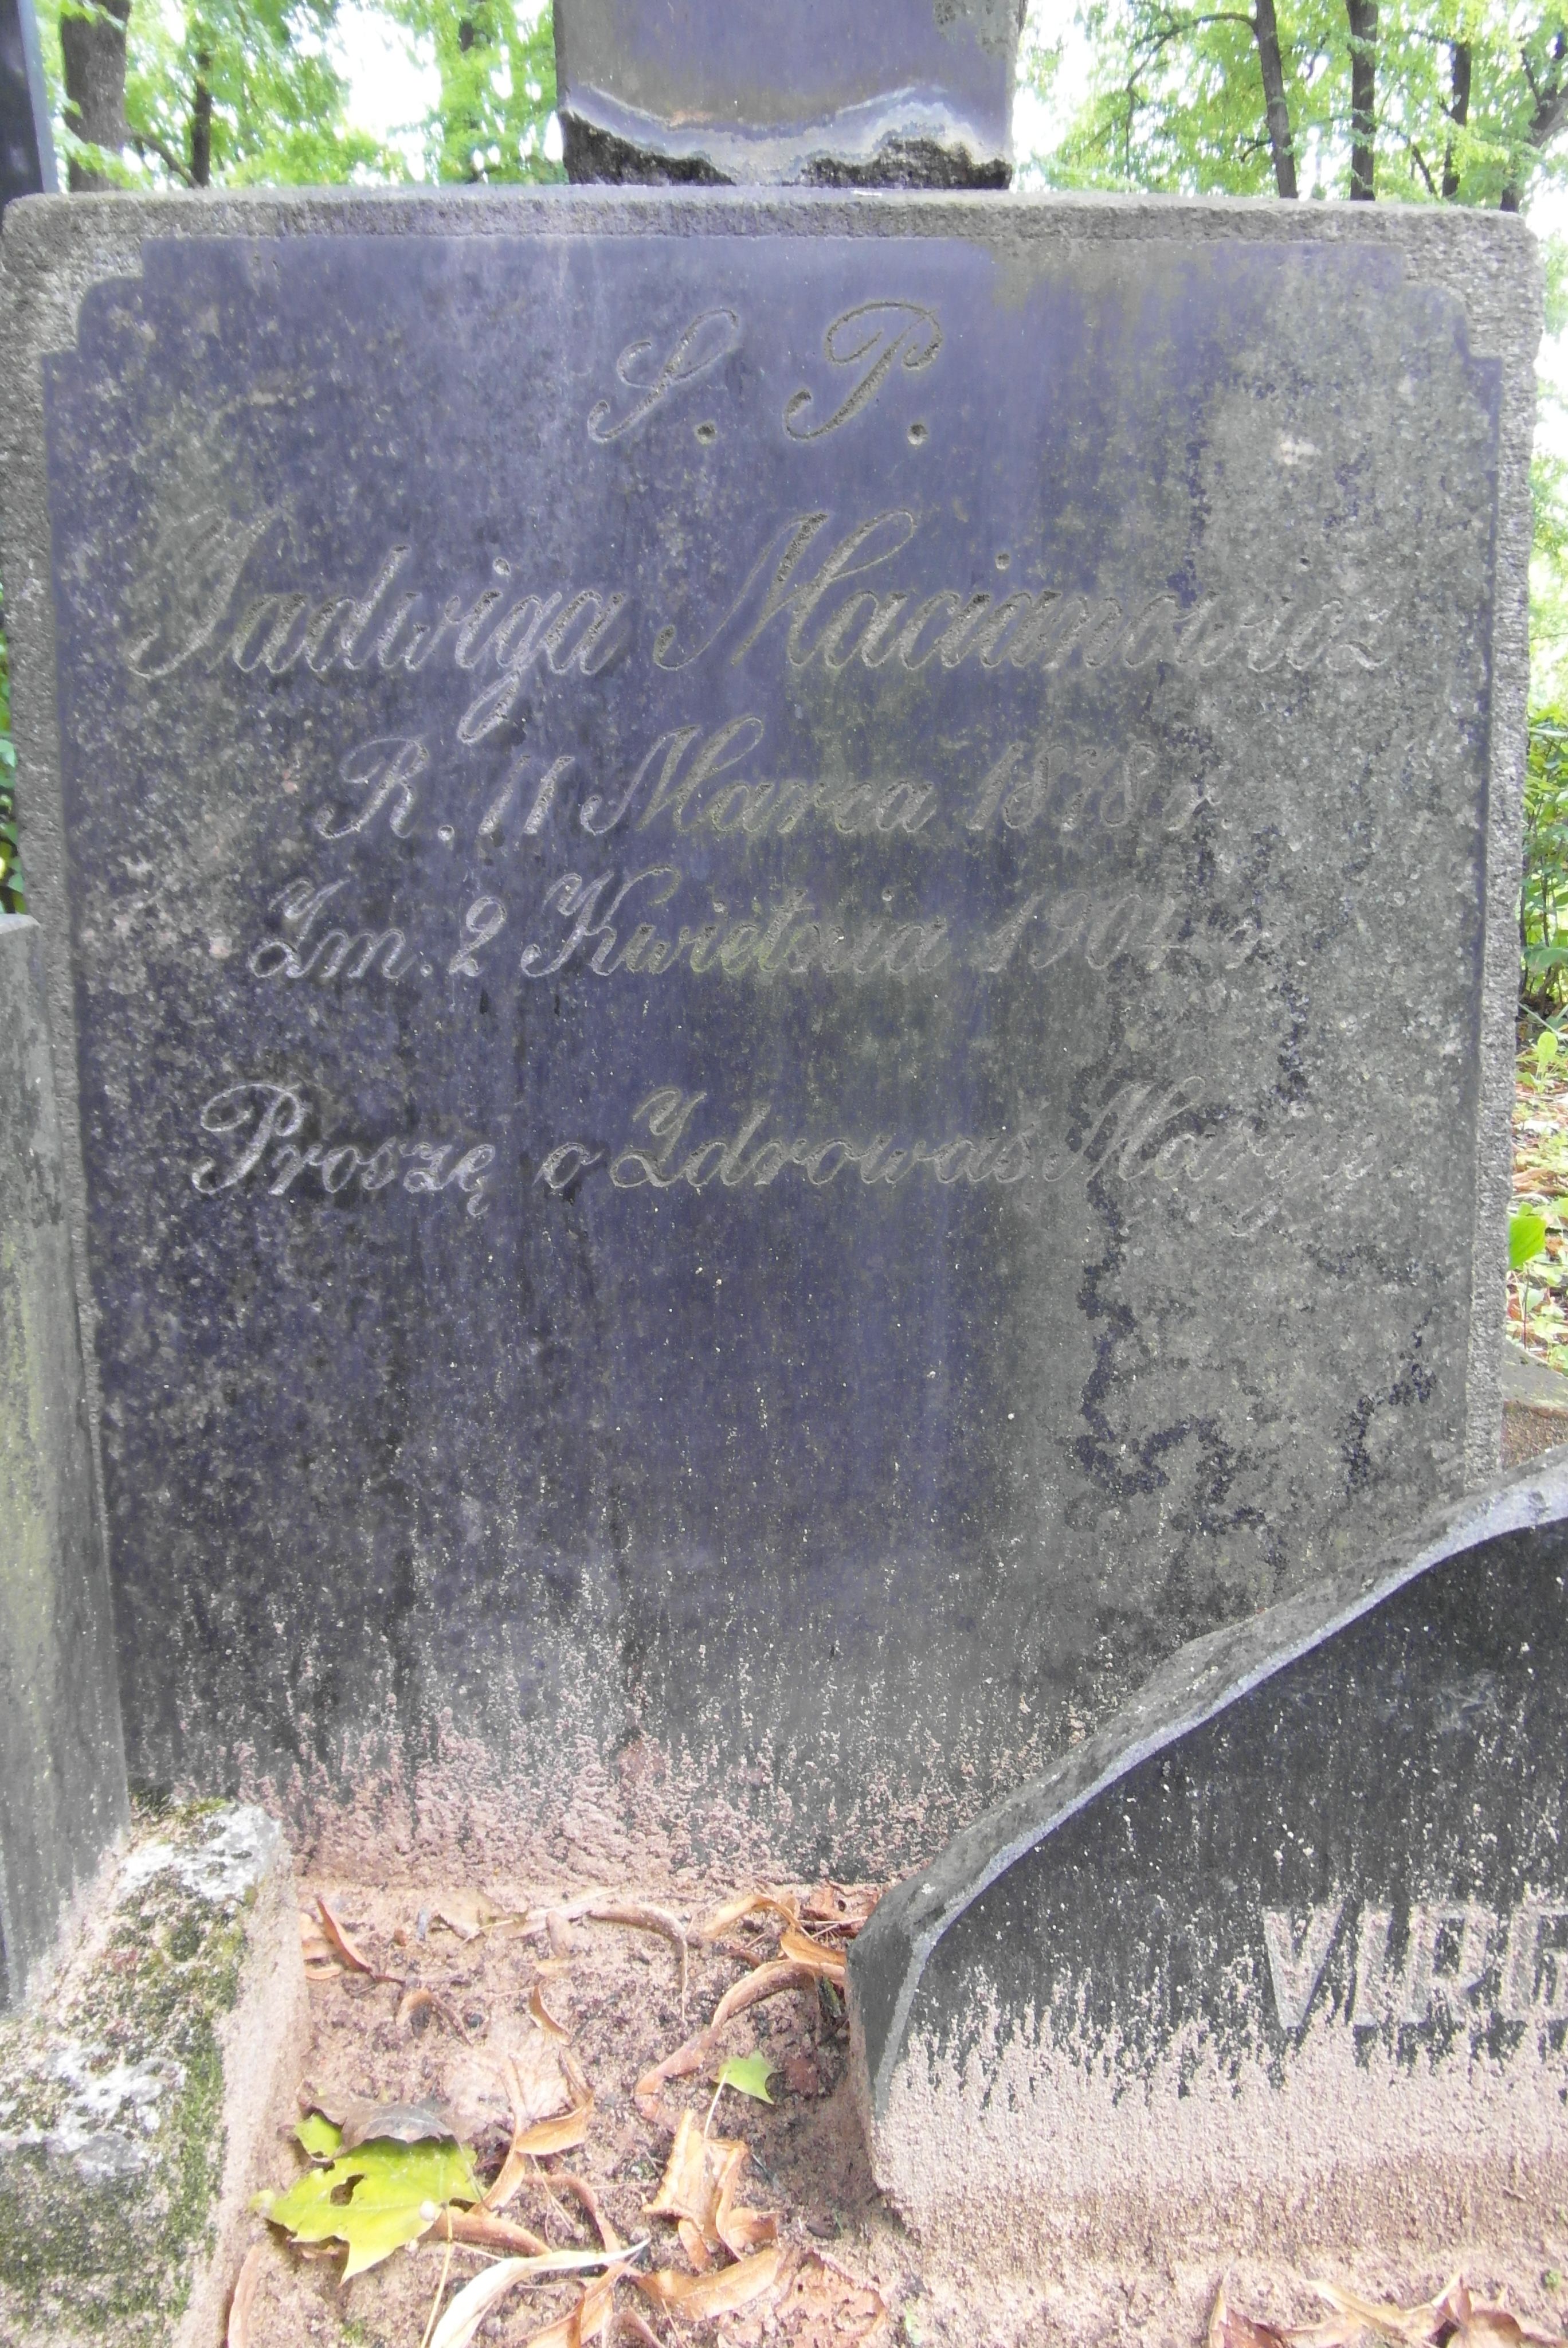 Inscription from the gravestone of Jadwiga Macianowicz, St Michael's cemetery in Riga, as of 2021.